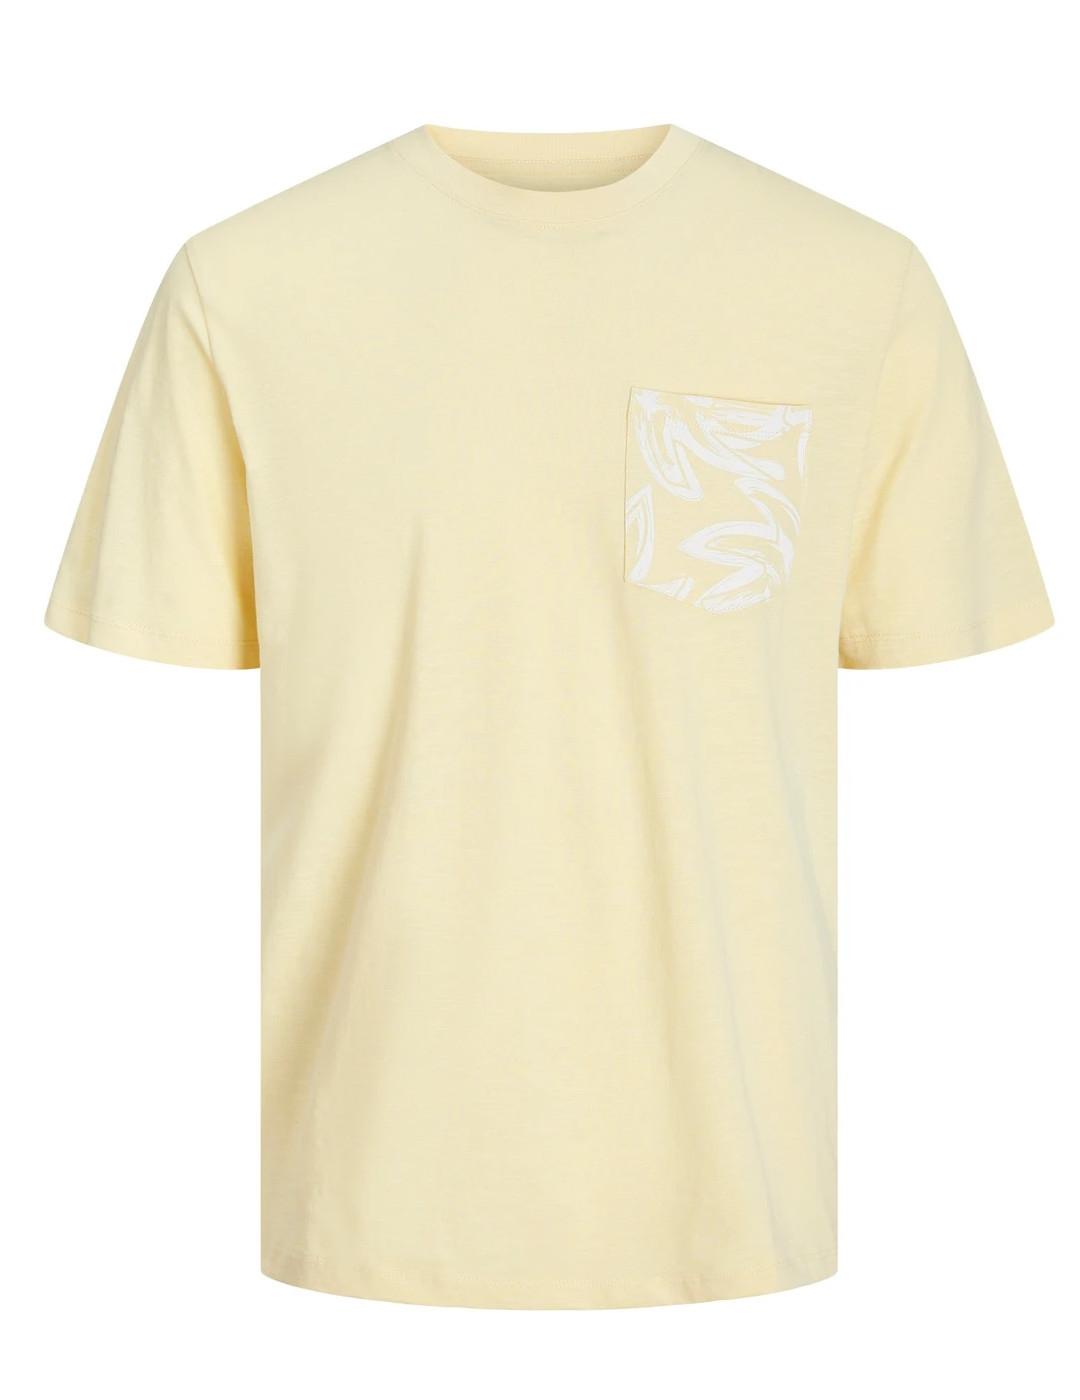 Camiseta Jack&Jones Lafayette amarilla manga corta hombre